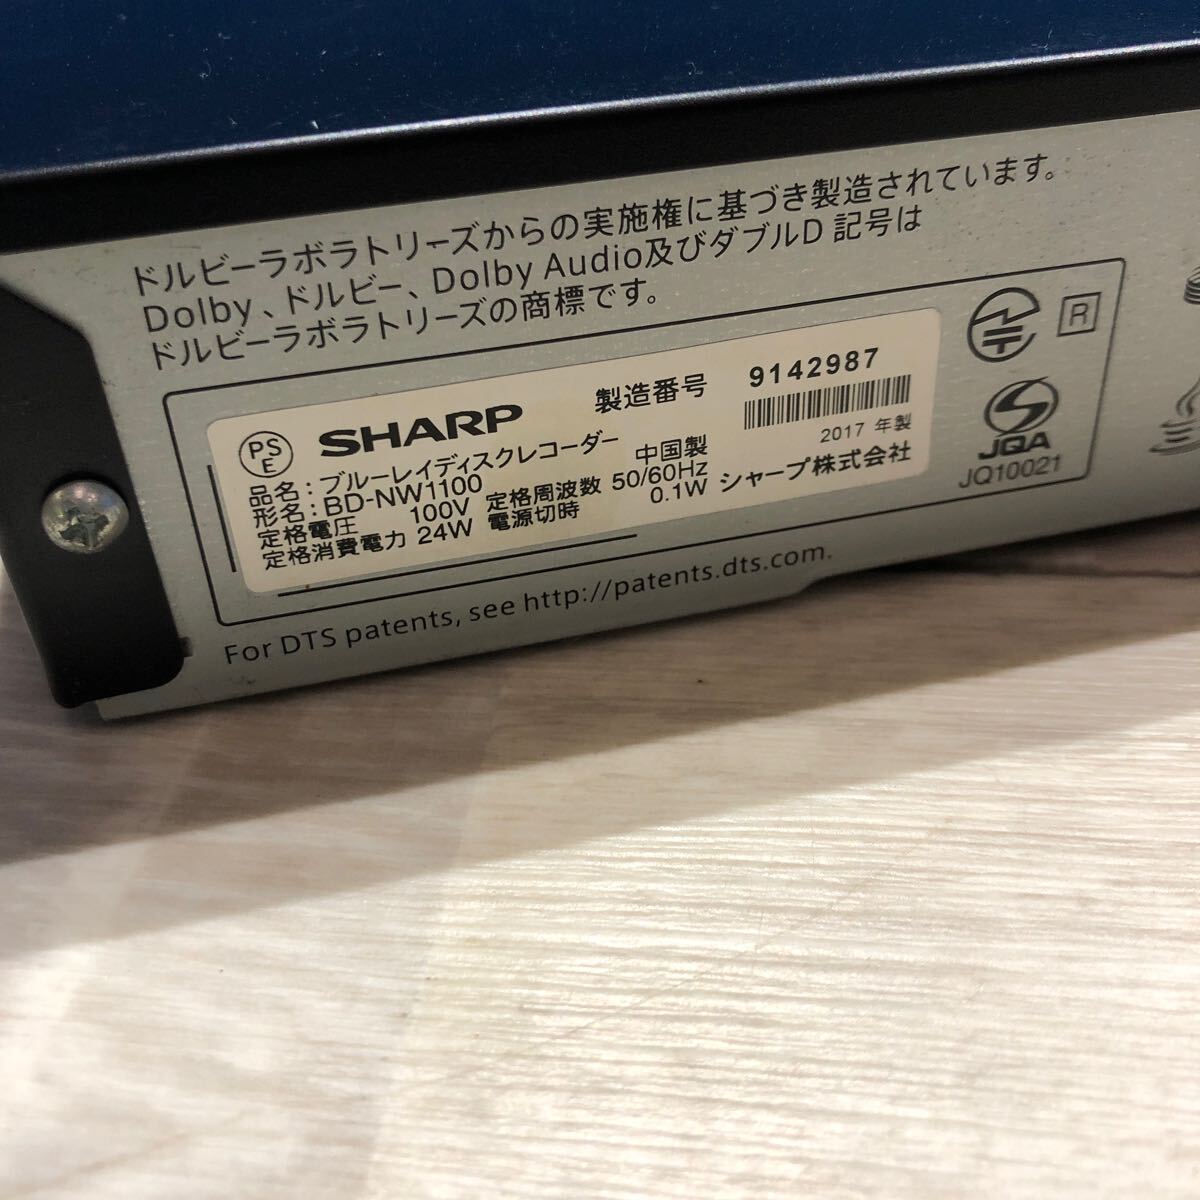 SHARP sharp BD-NW1100 HDD BD Blu-ray Blue-ray диск магнитофон 2017 год производства шнур электропитания имеется электризация OK просмотр OK текущее состояние товар 